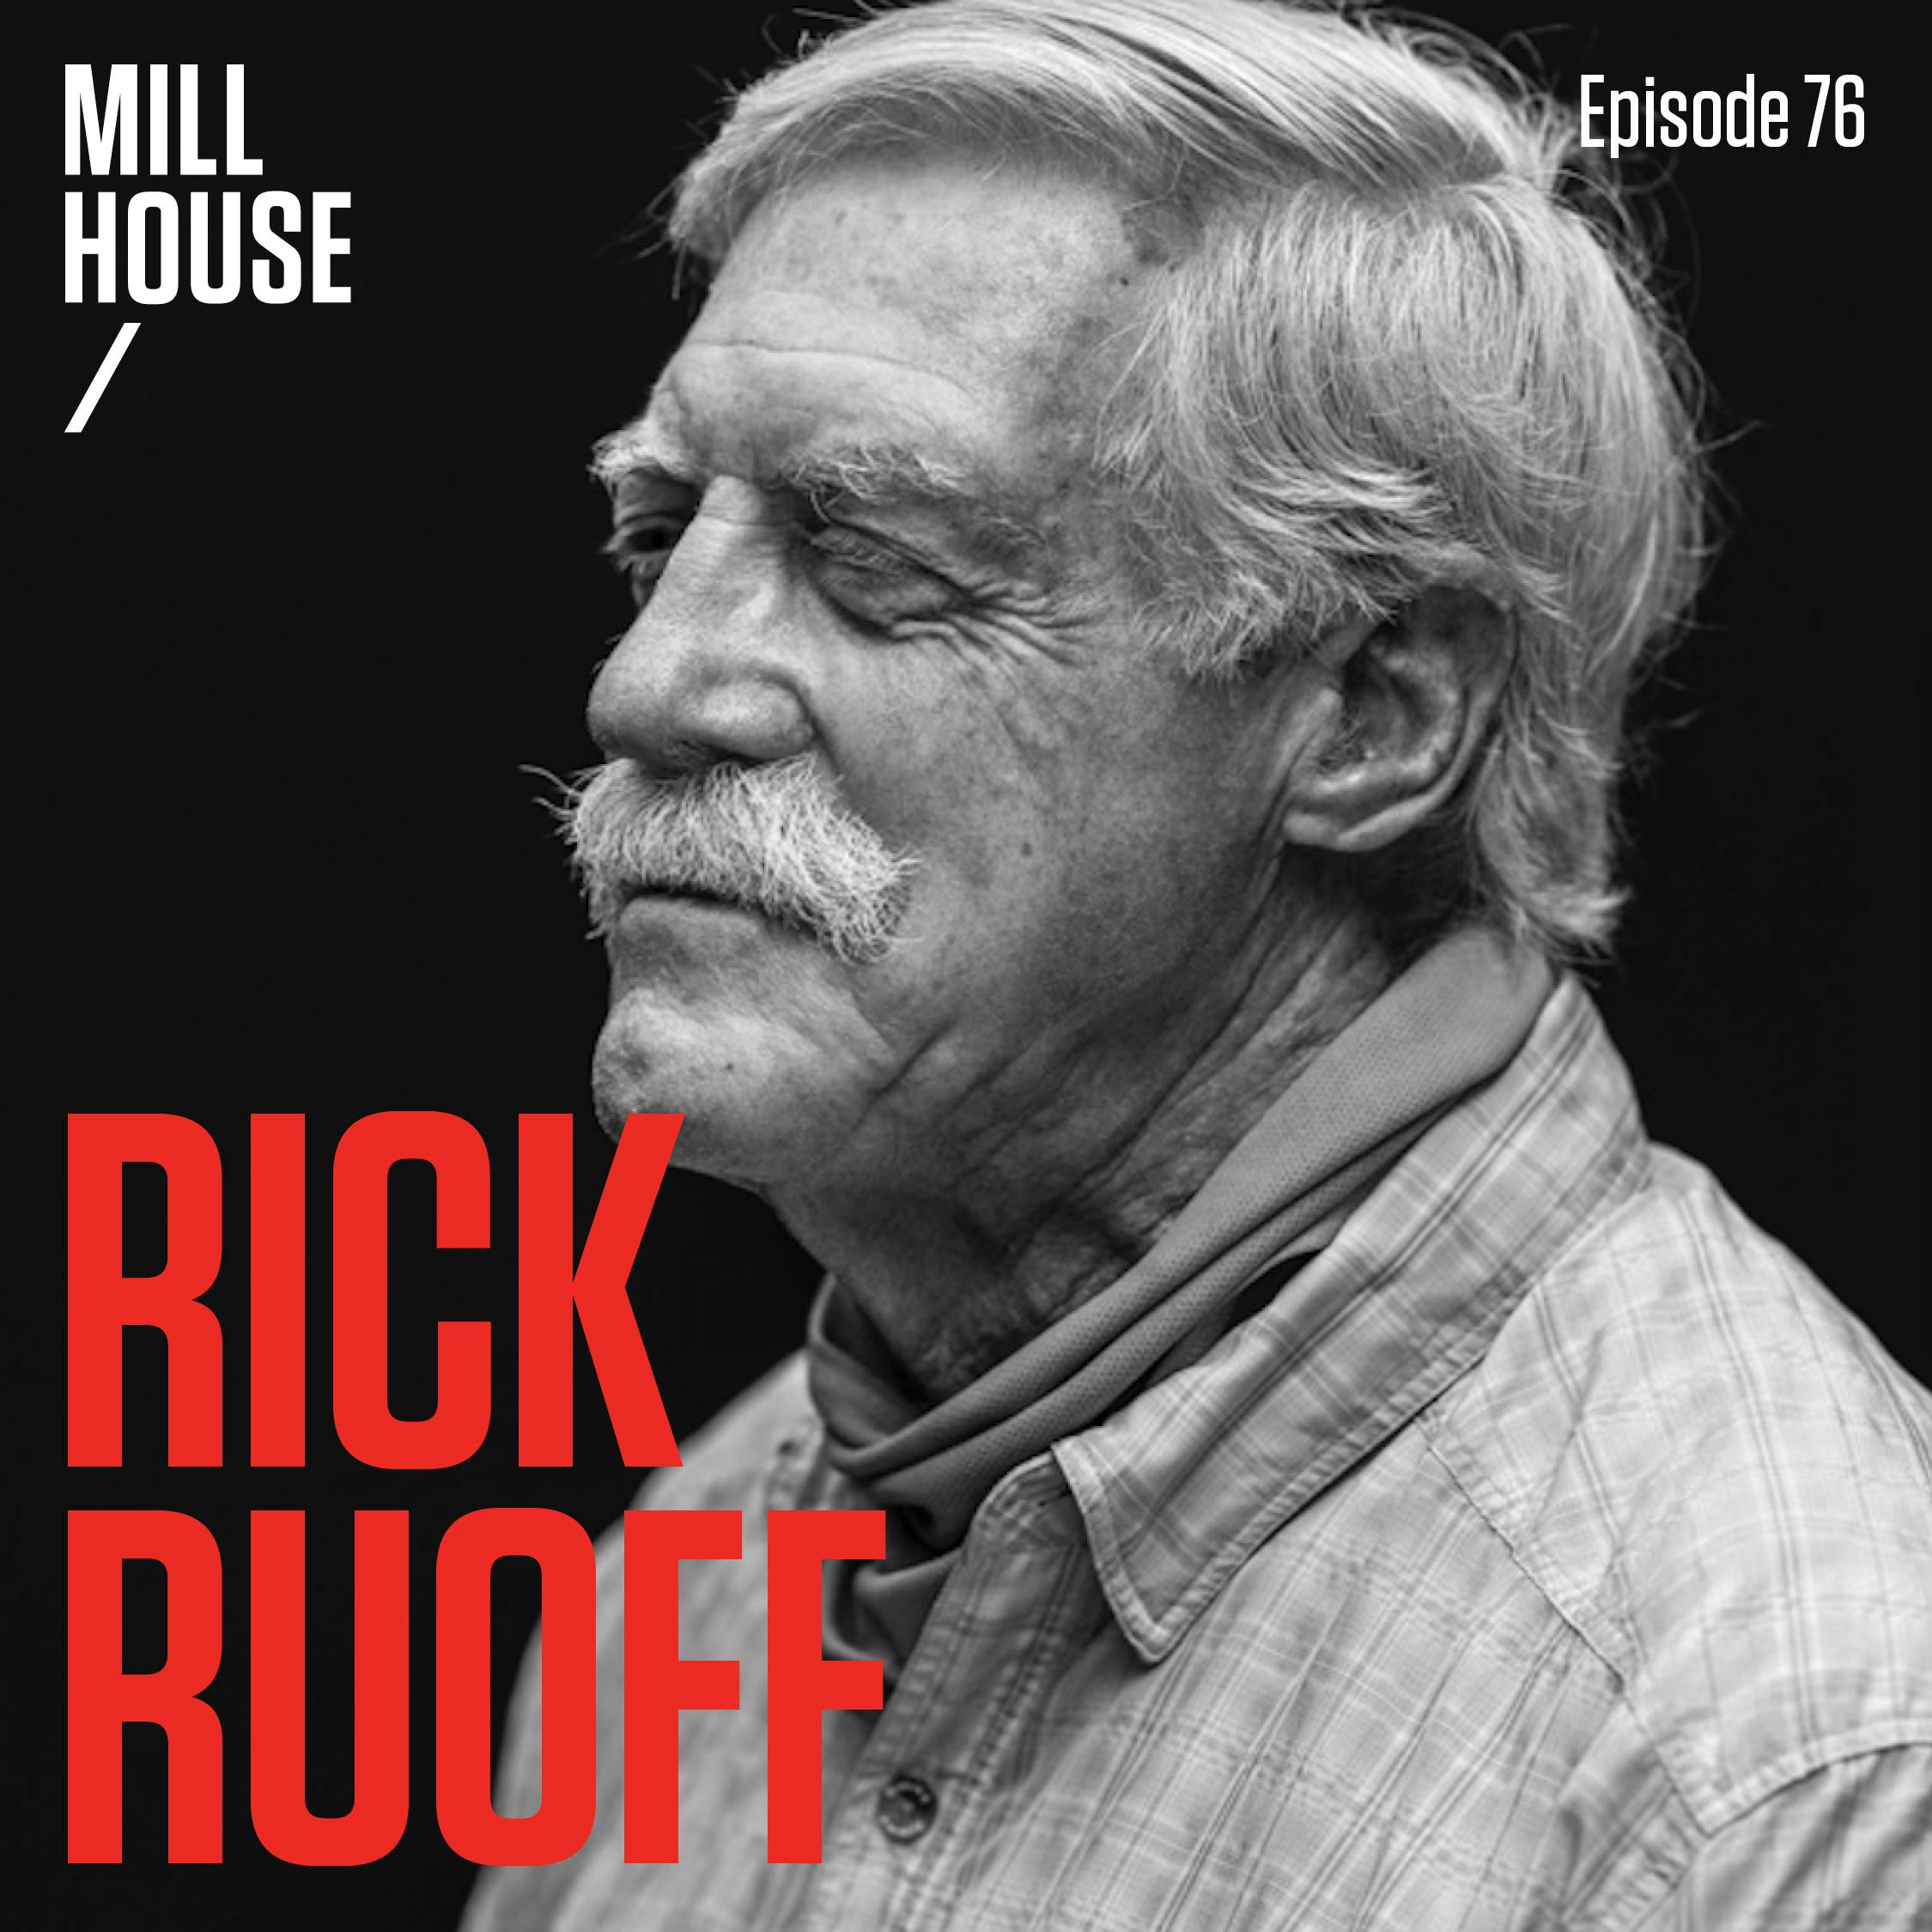 Episode 76: Capt. Rick Ruoff - The Nineteenth Pole